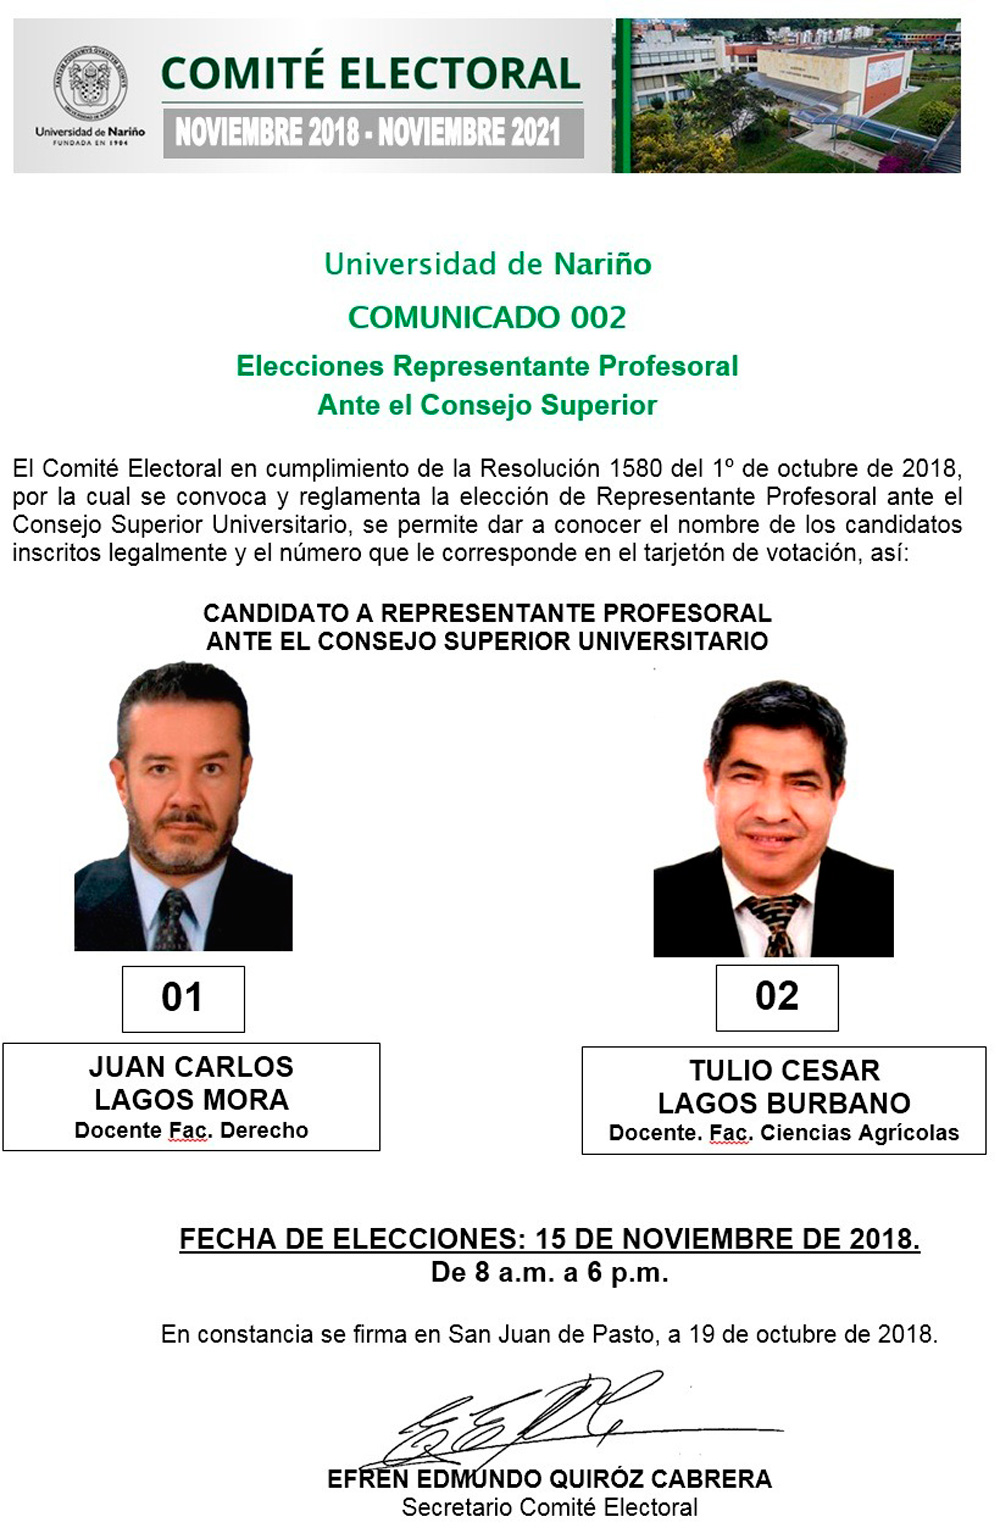 https://periodico.udenar.edu.co/wp-content/uploads/2018/10/comunicado-comite-electoral-udenar-periodico.jpg